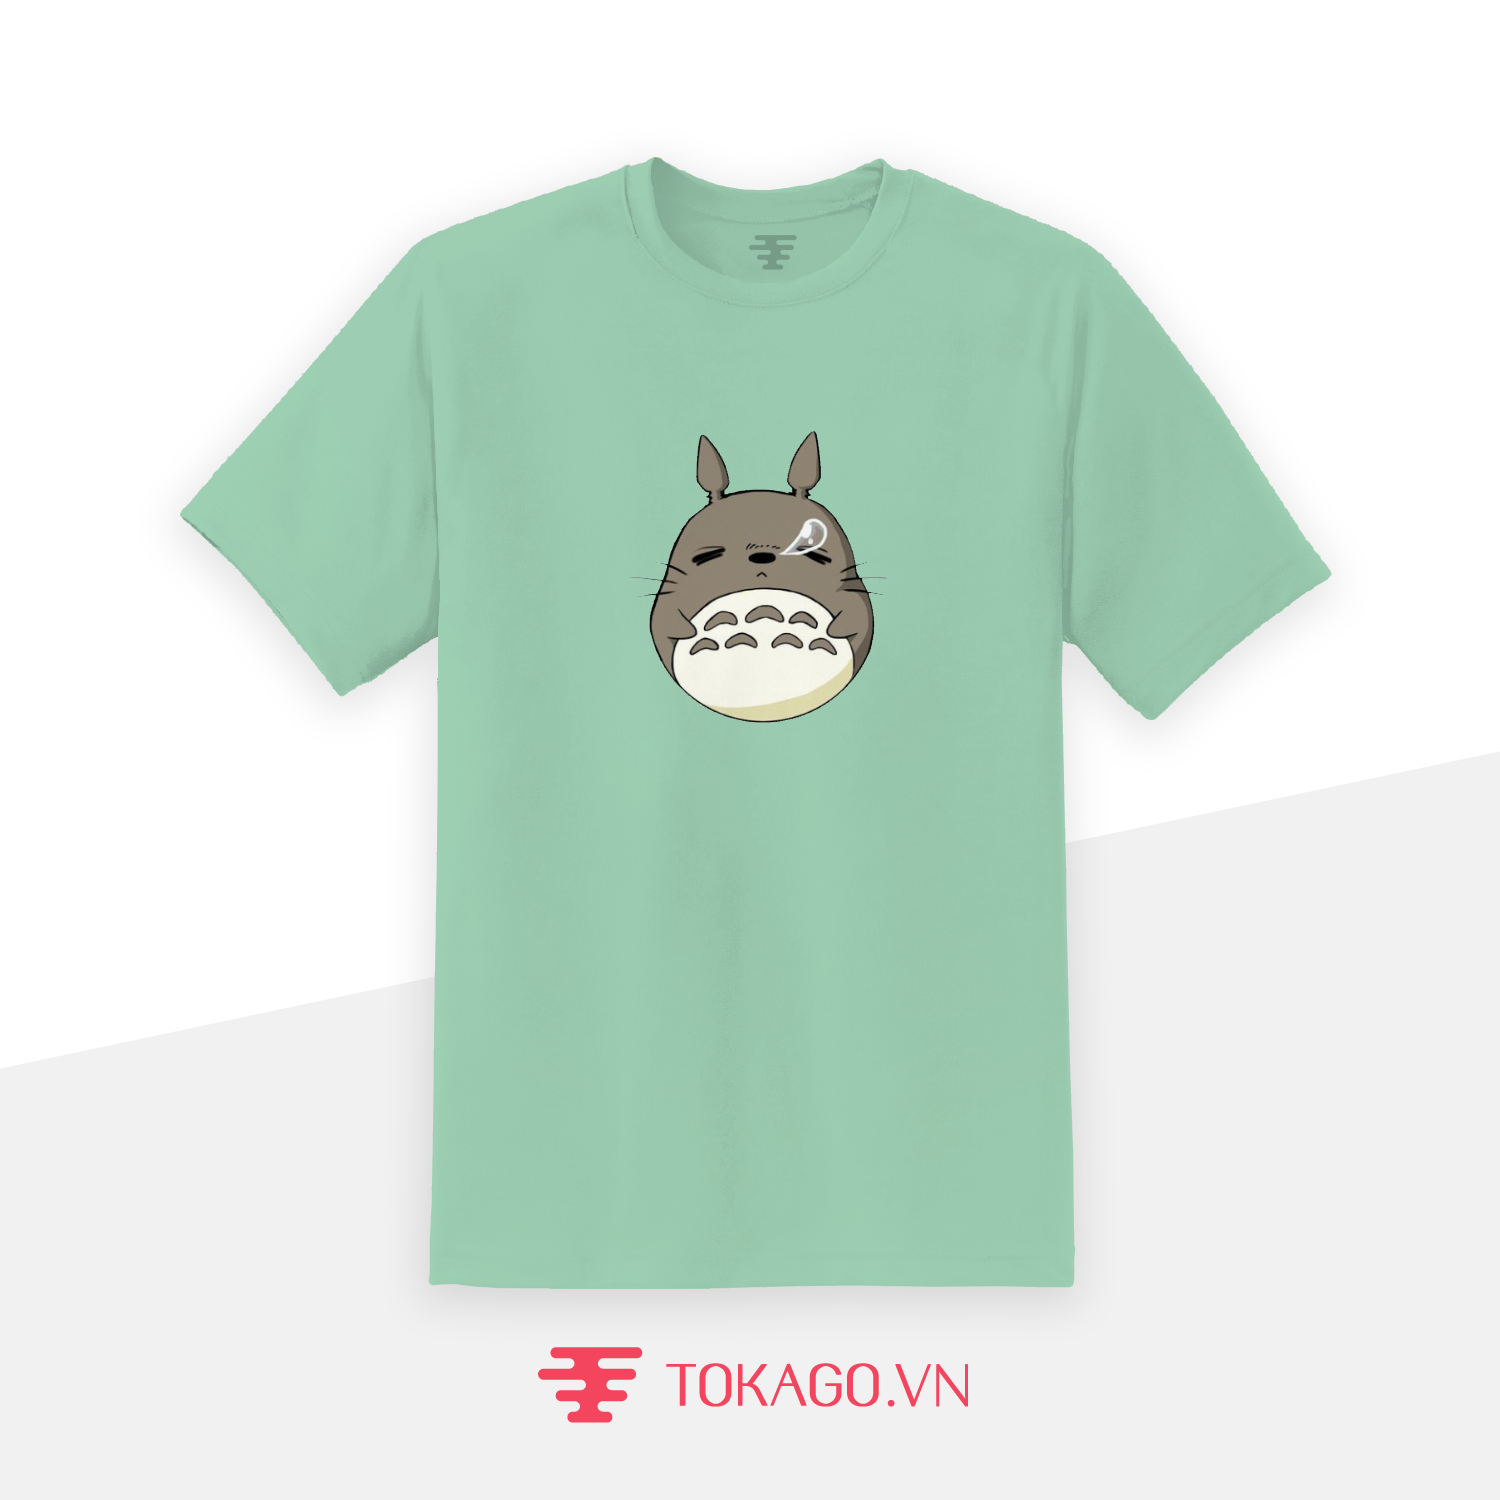 Sleeping Totoro